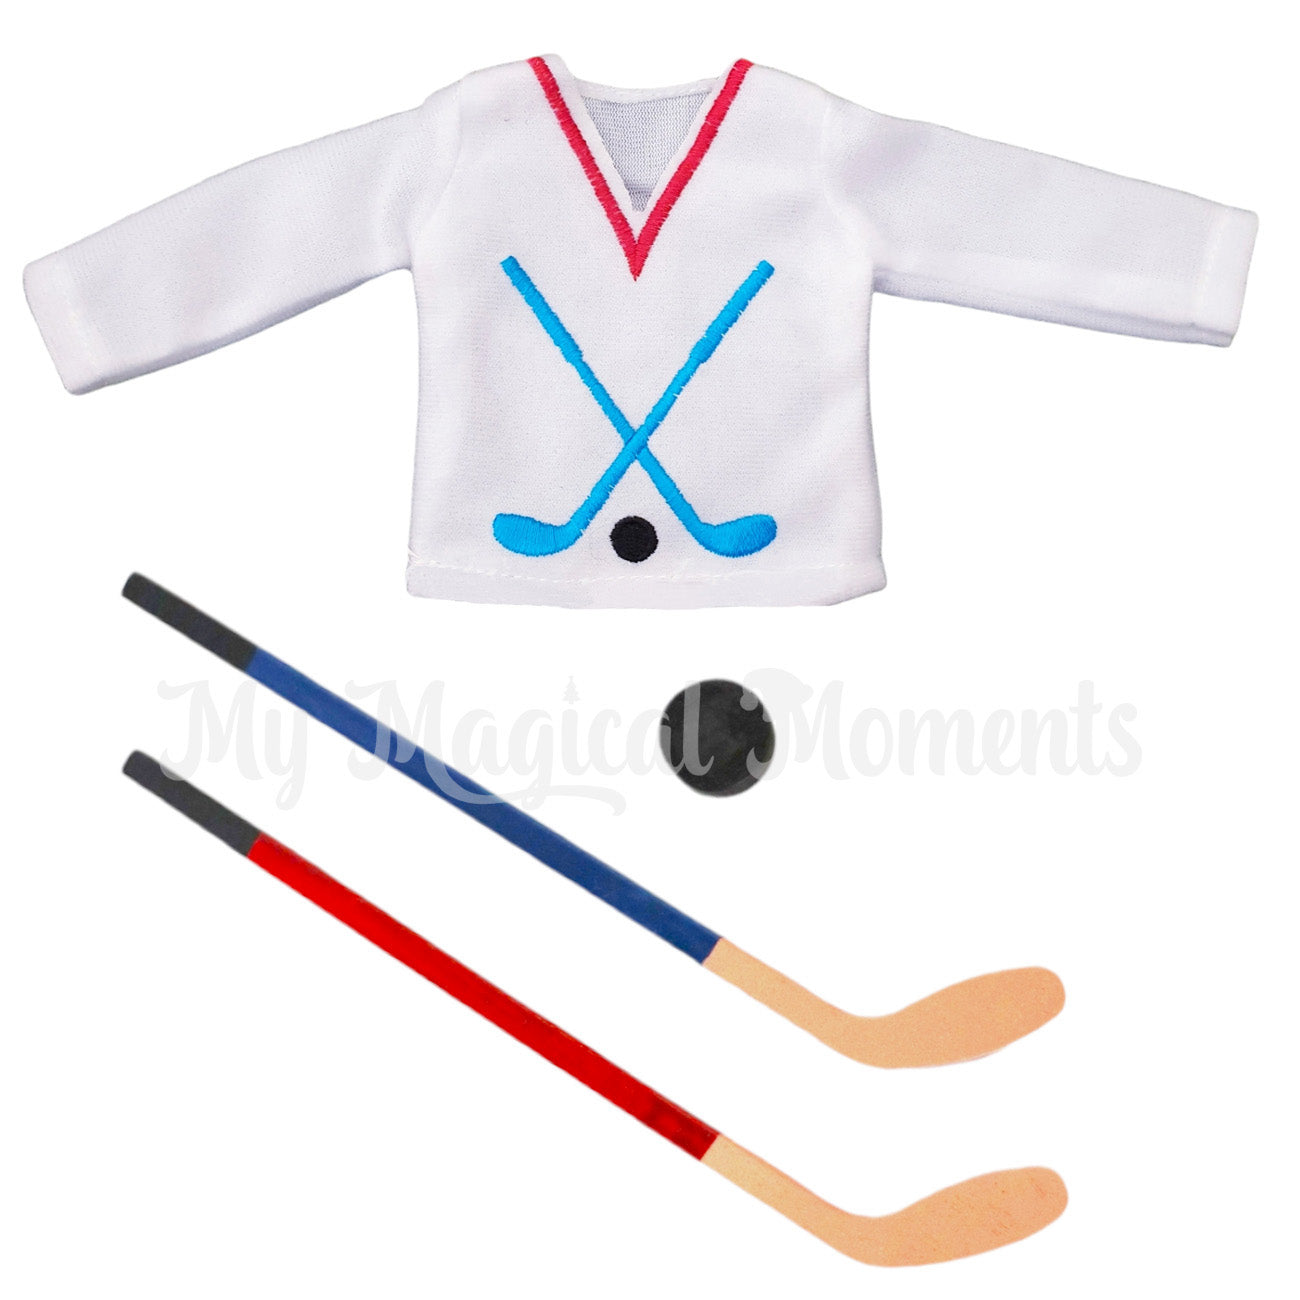 Elf hockey jersey with miniature hockey sticks and puck